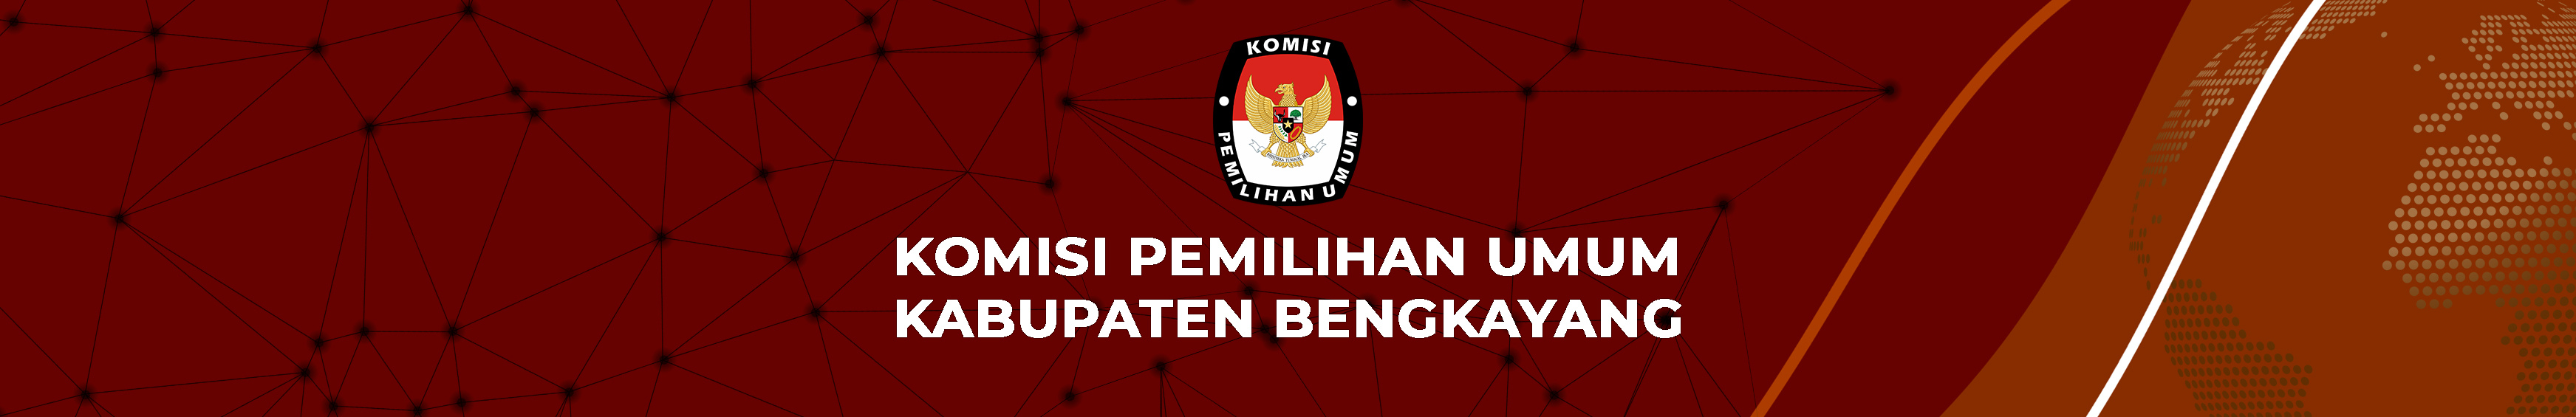 Website KPU Kabupaten Bengkayang